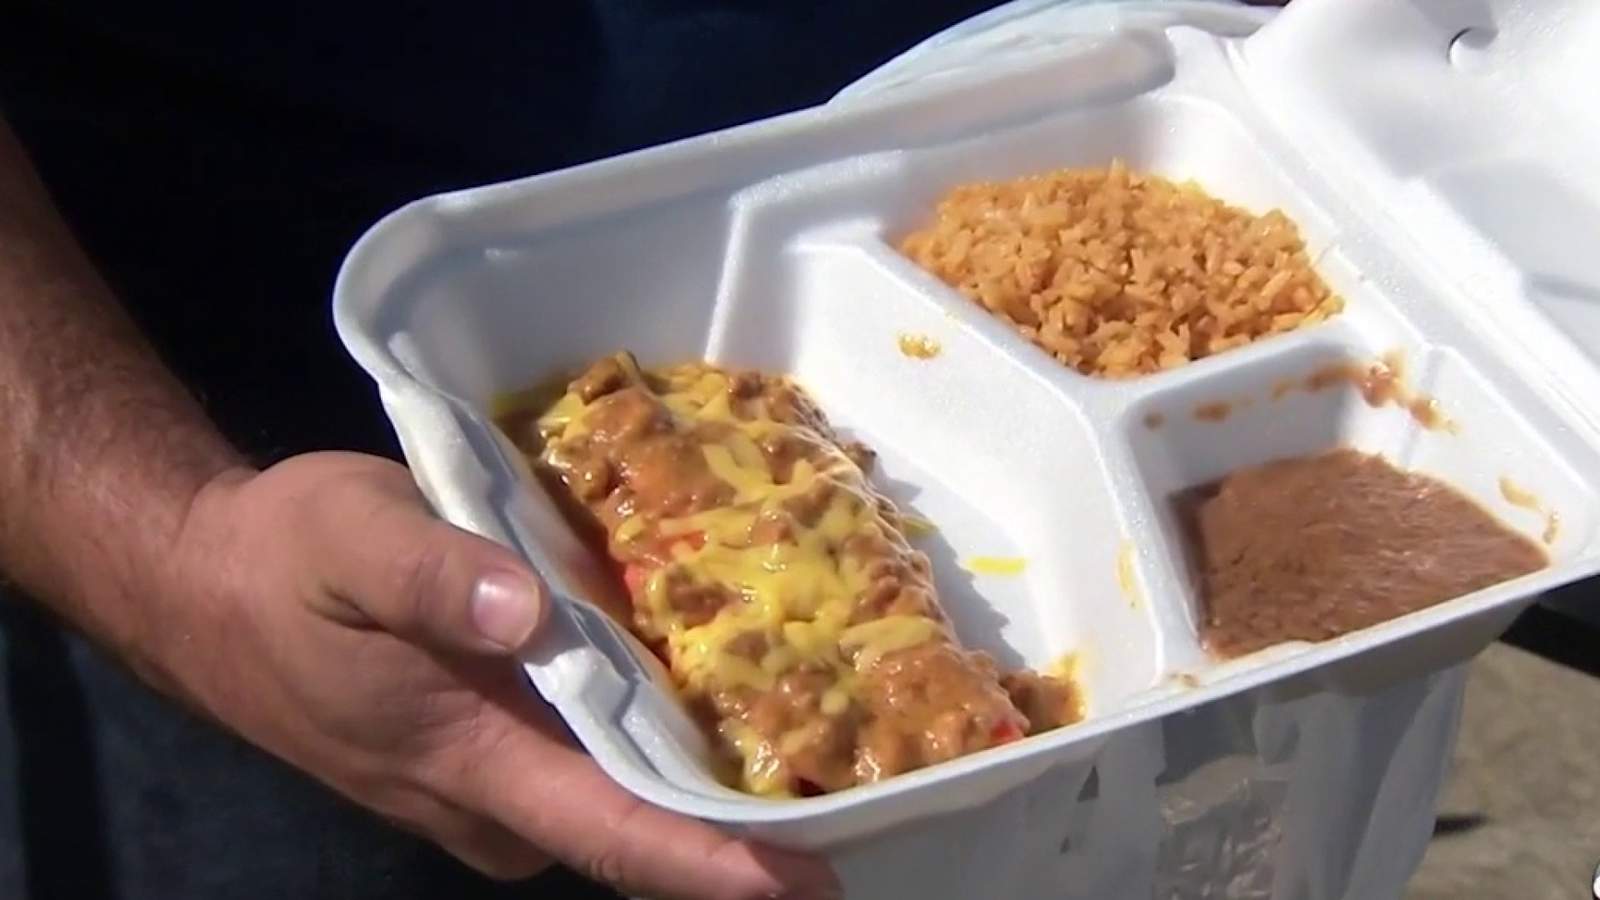 SE Side restaurant gives away 500 enchilada plates to thank community